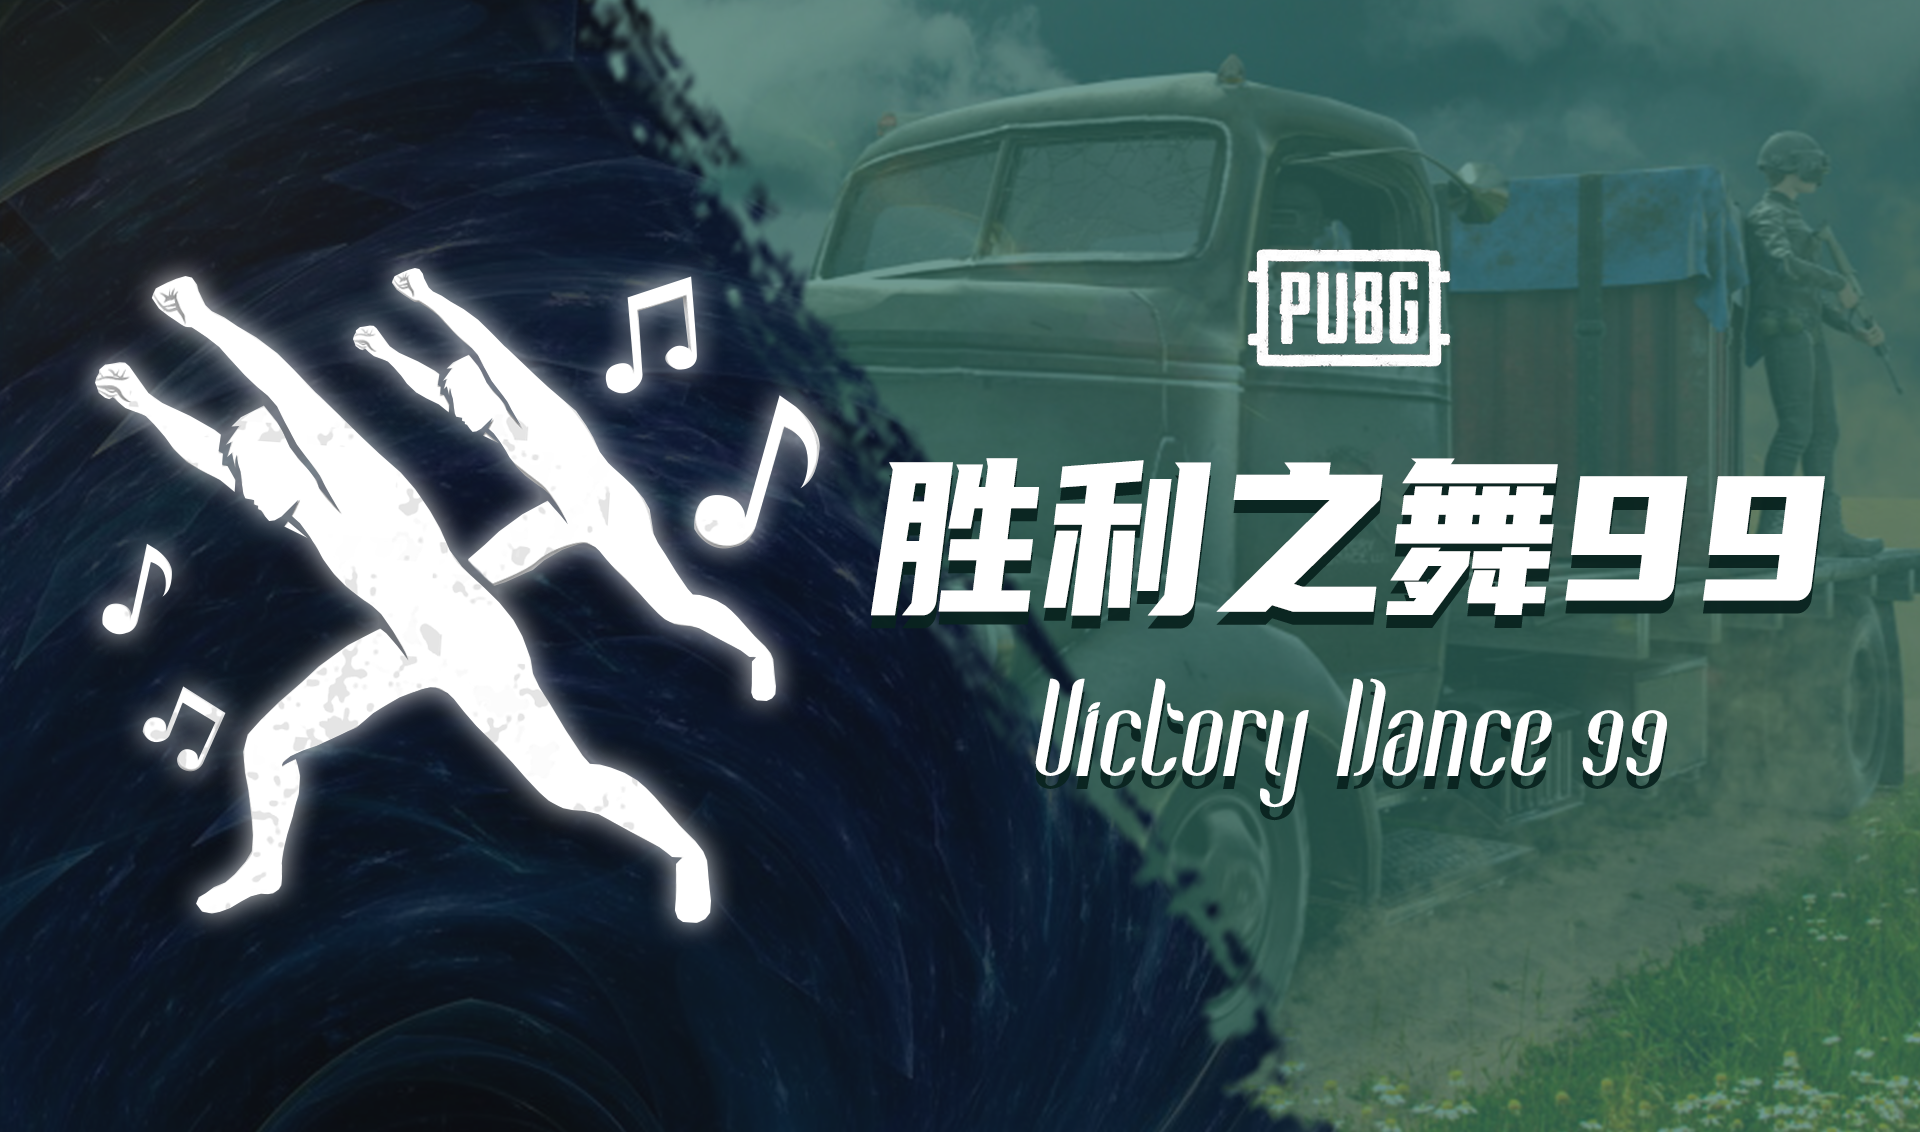 PUBG 胜利之舞99 Victory Dance 99